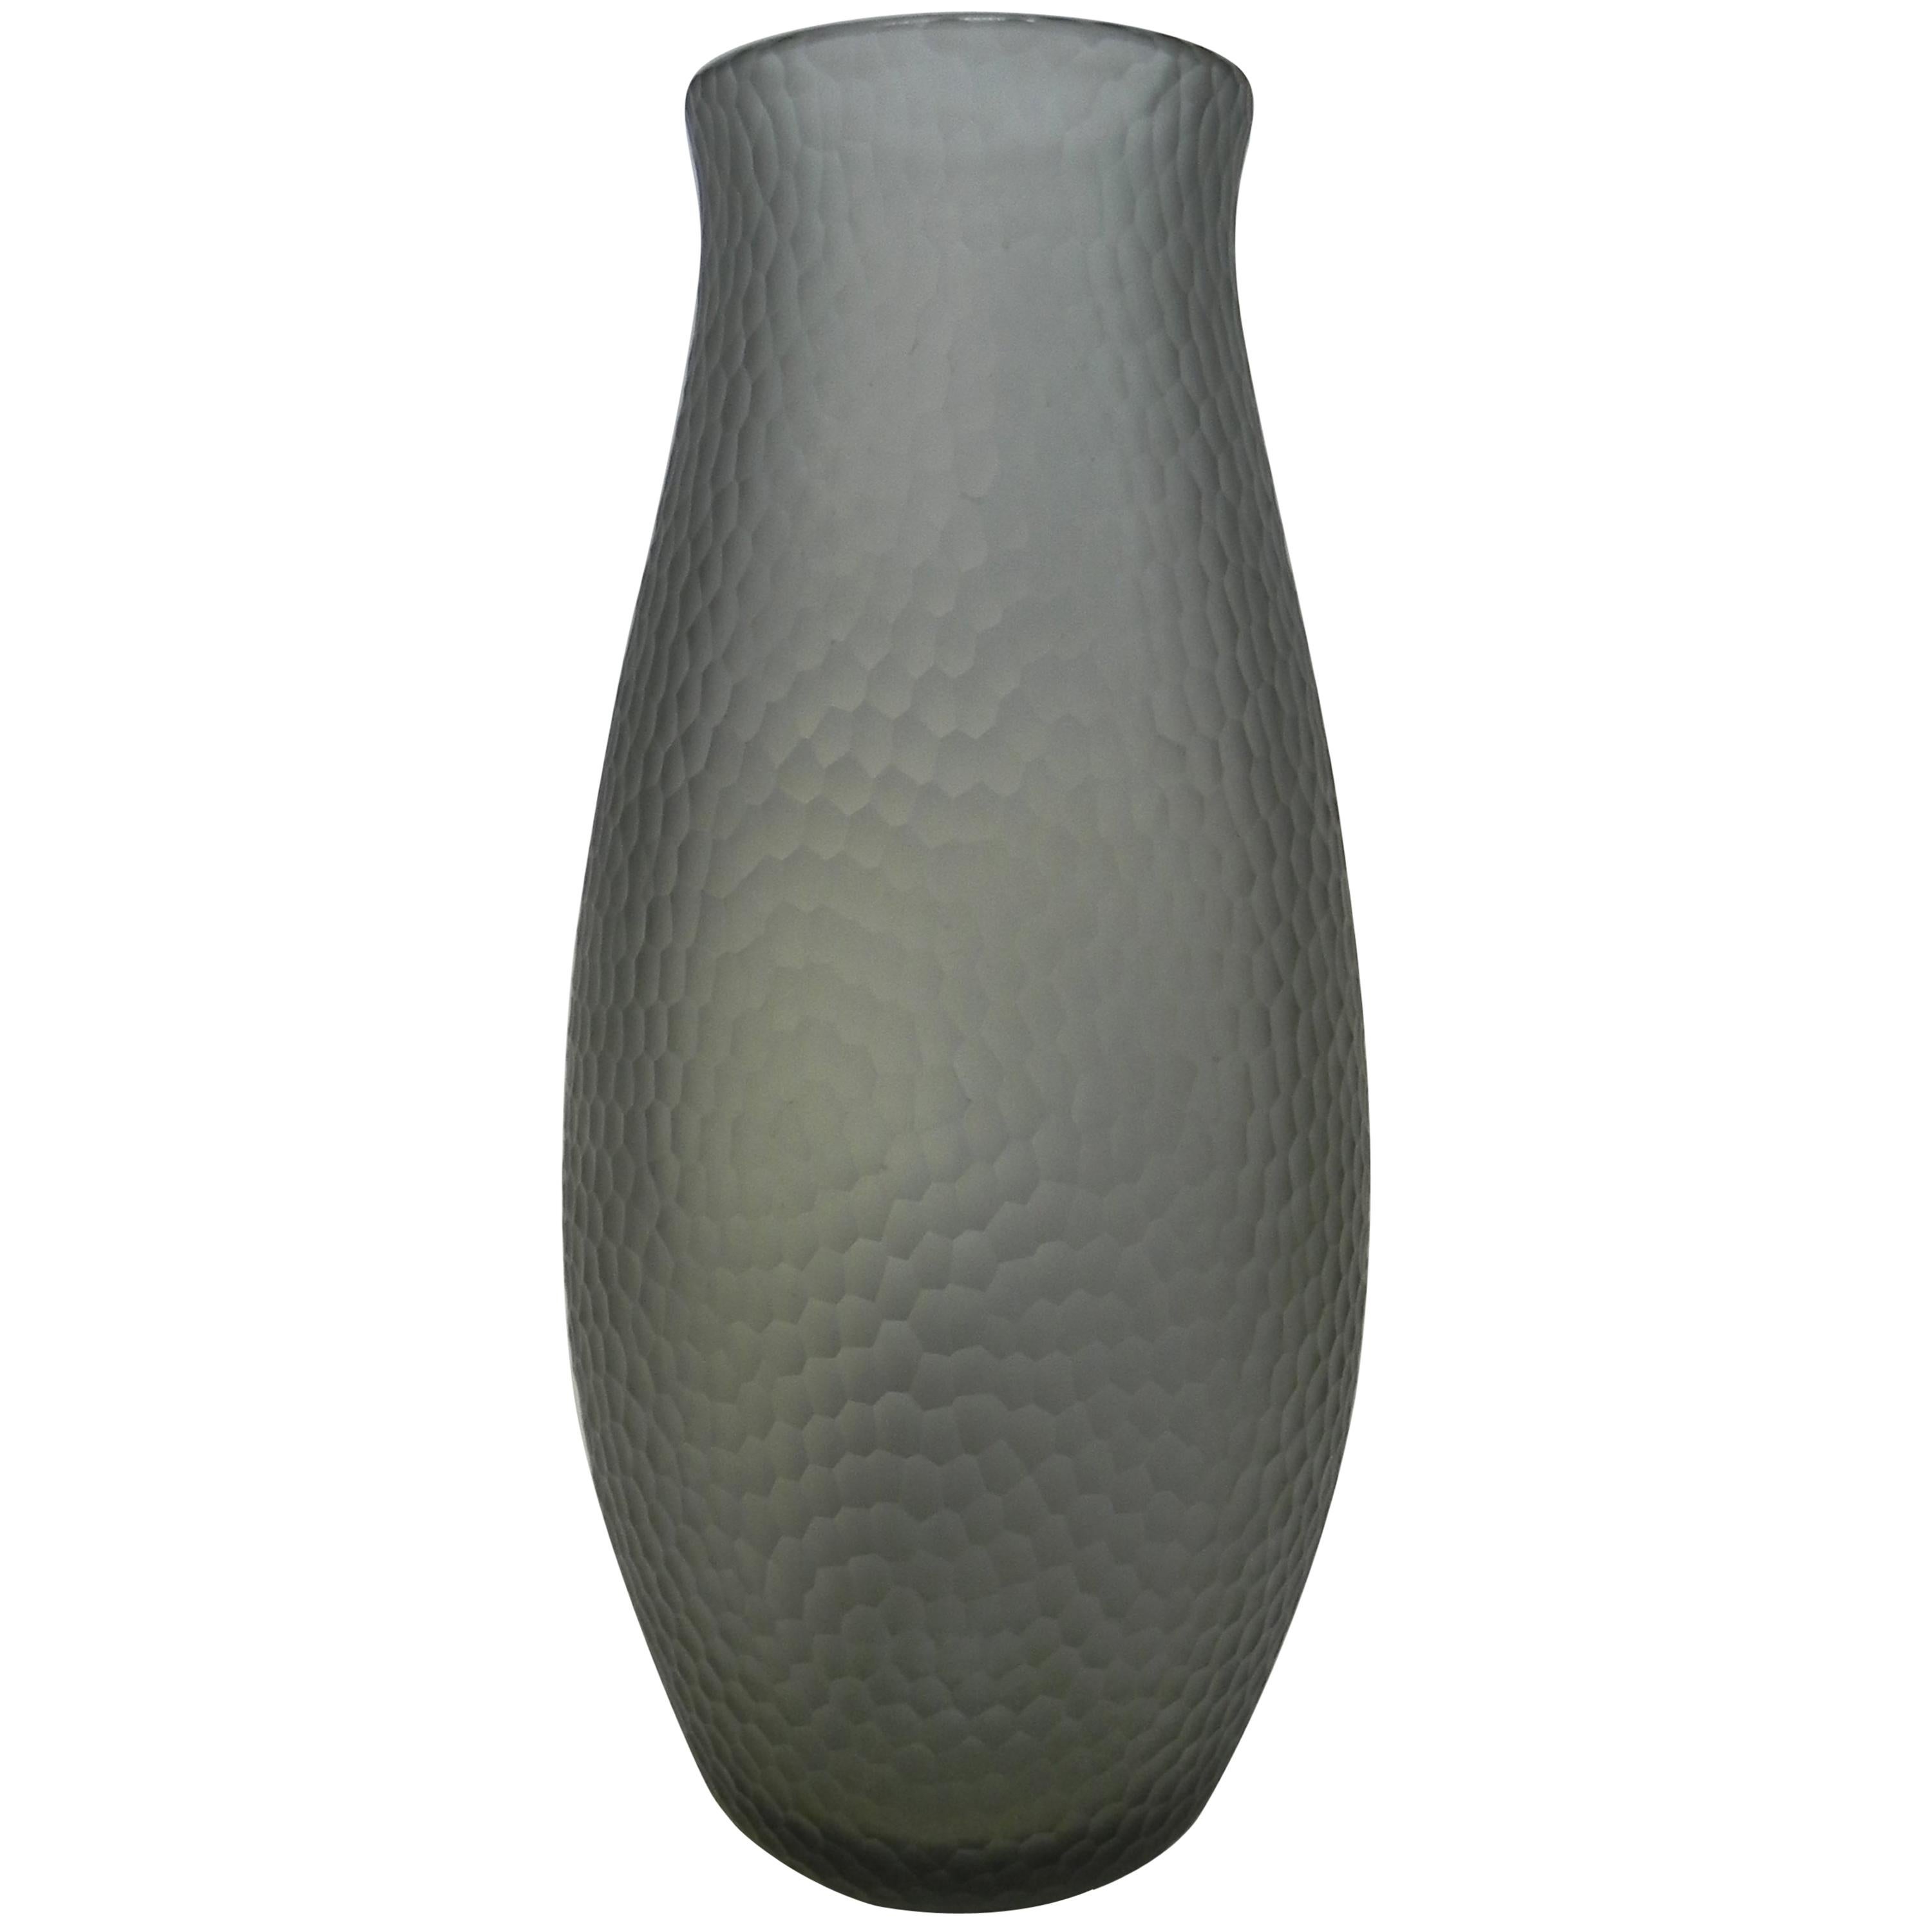 Big Carlo Scarpa Venini Murano Glass Vase "Battuto" Series Acid Signed